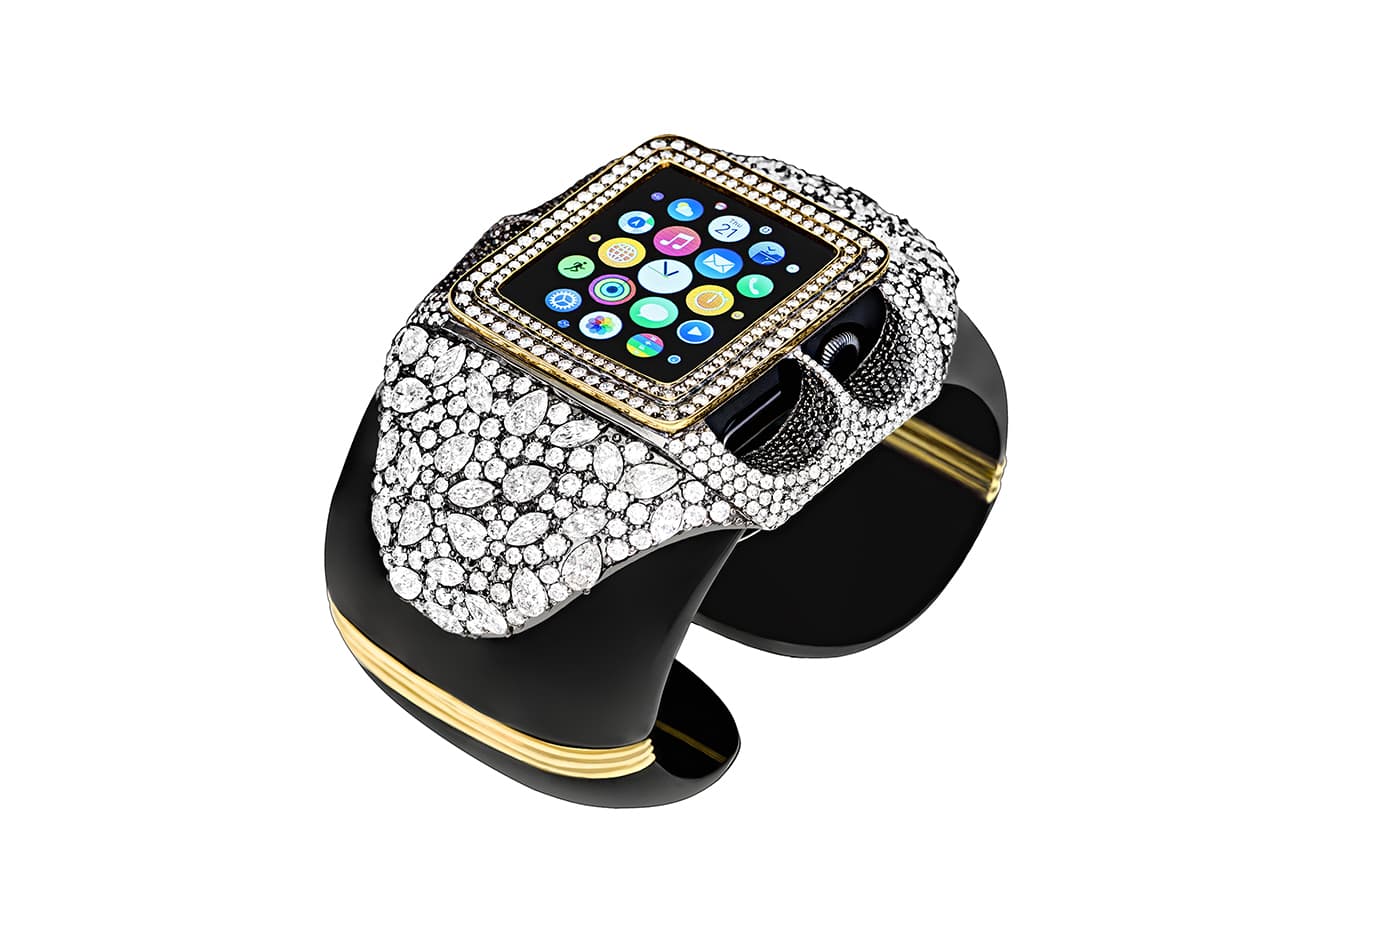 Margot McKinney Apple Watch cuff bracelet with over 25 cts of diamonds